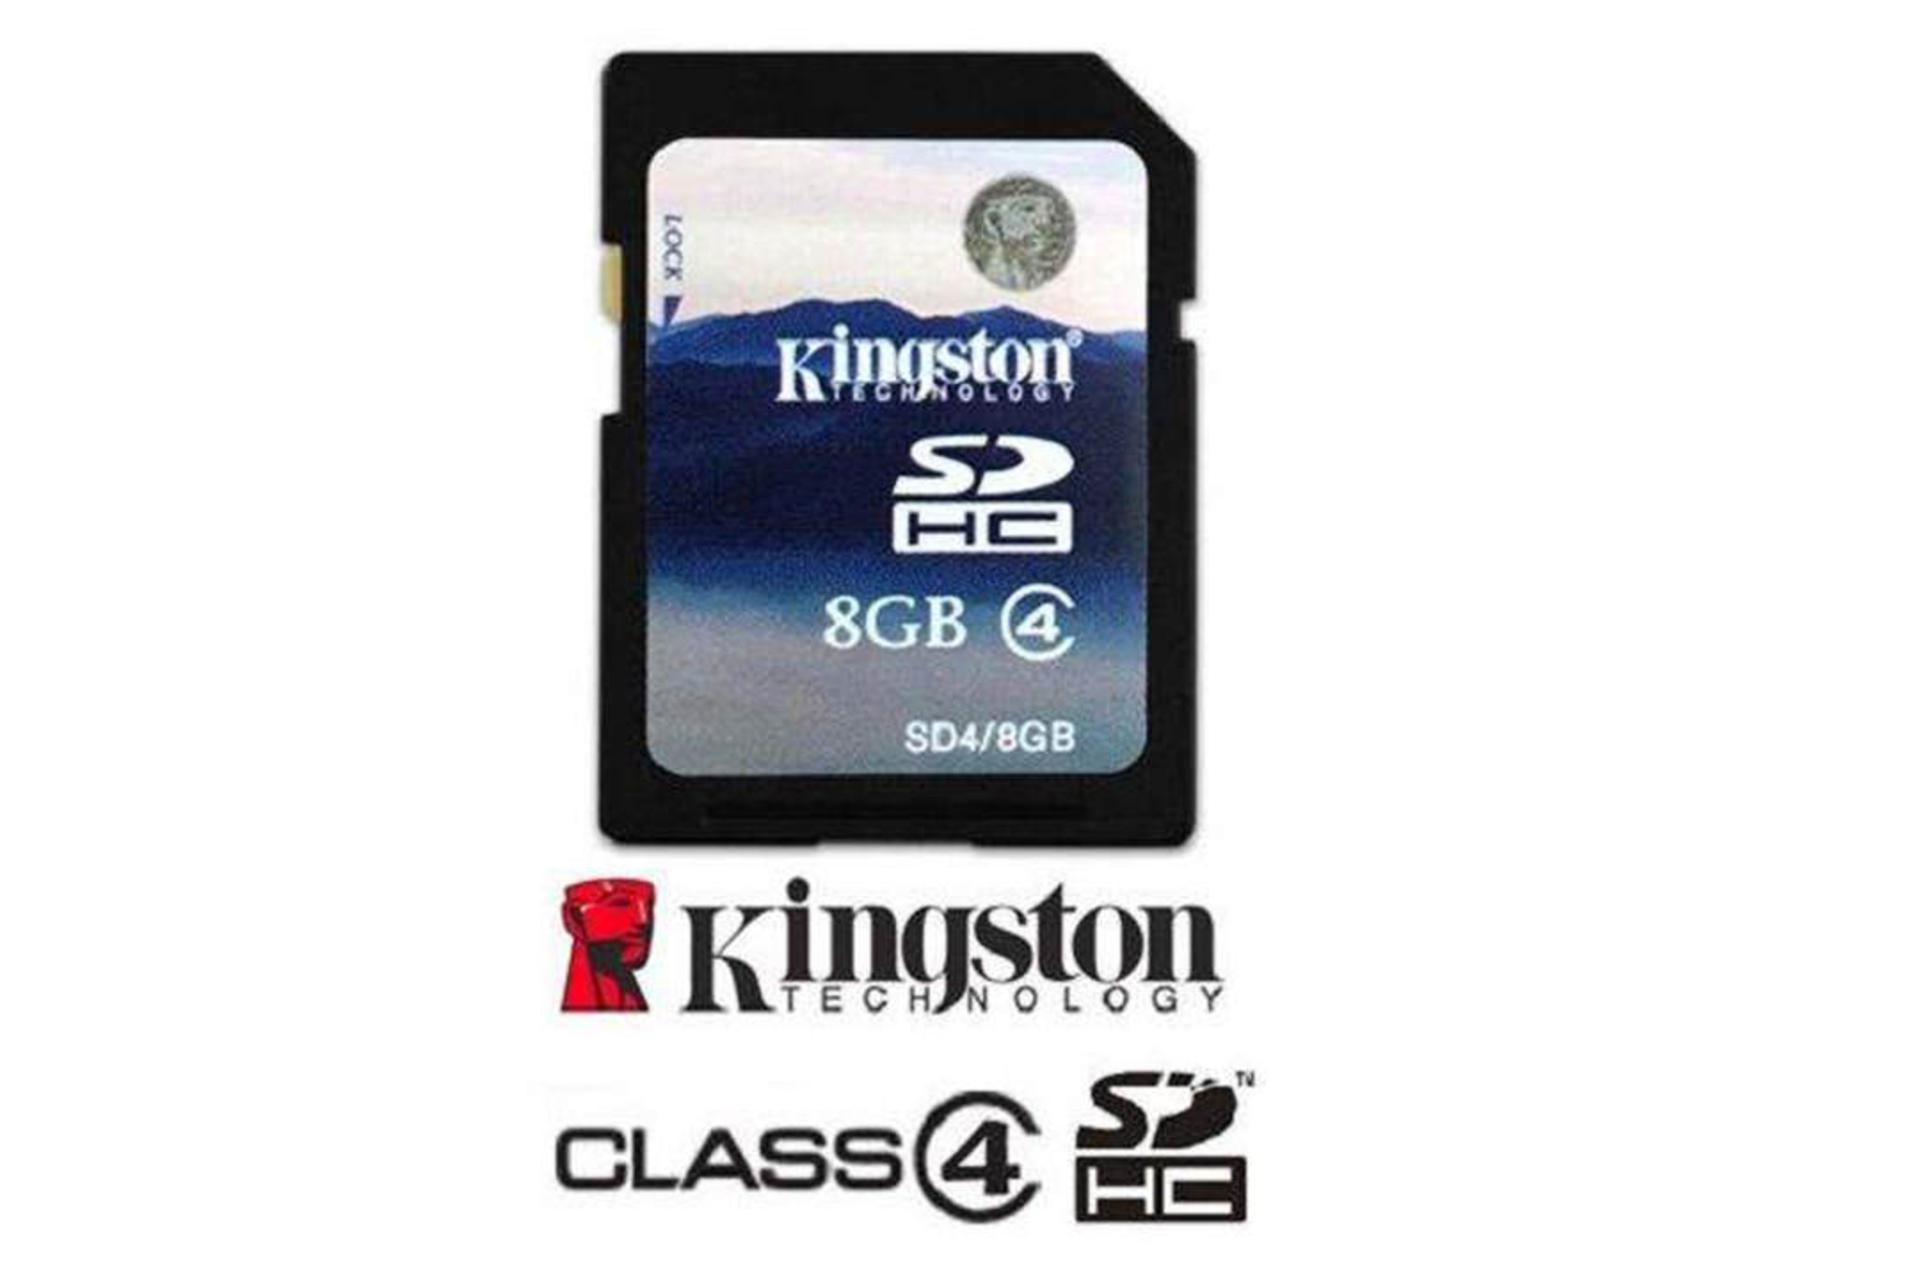 Kingston SD4 SDHC Class 4 8GB